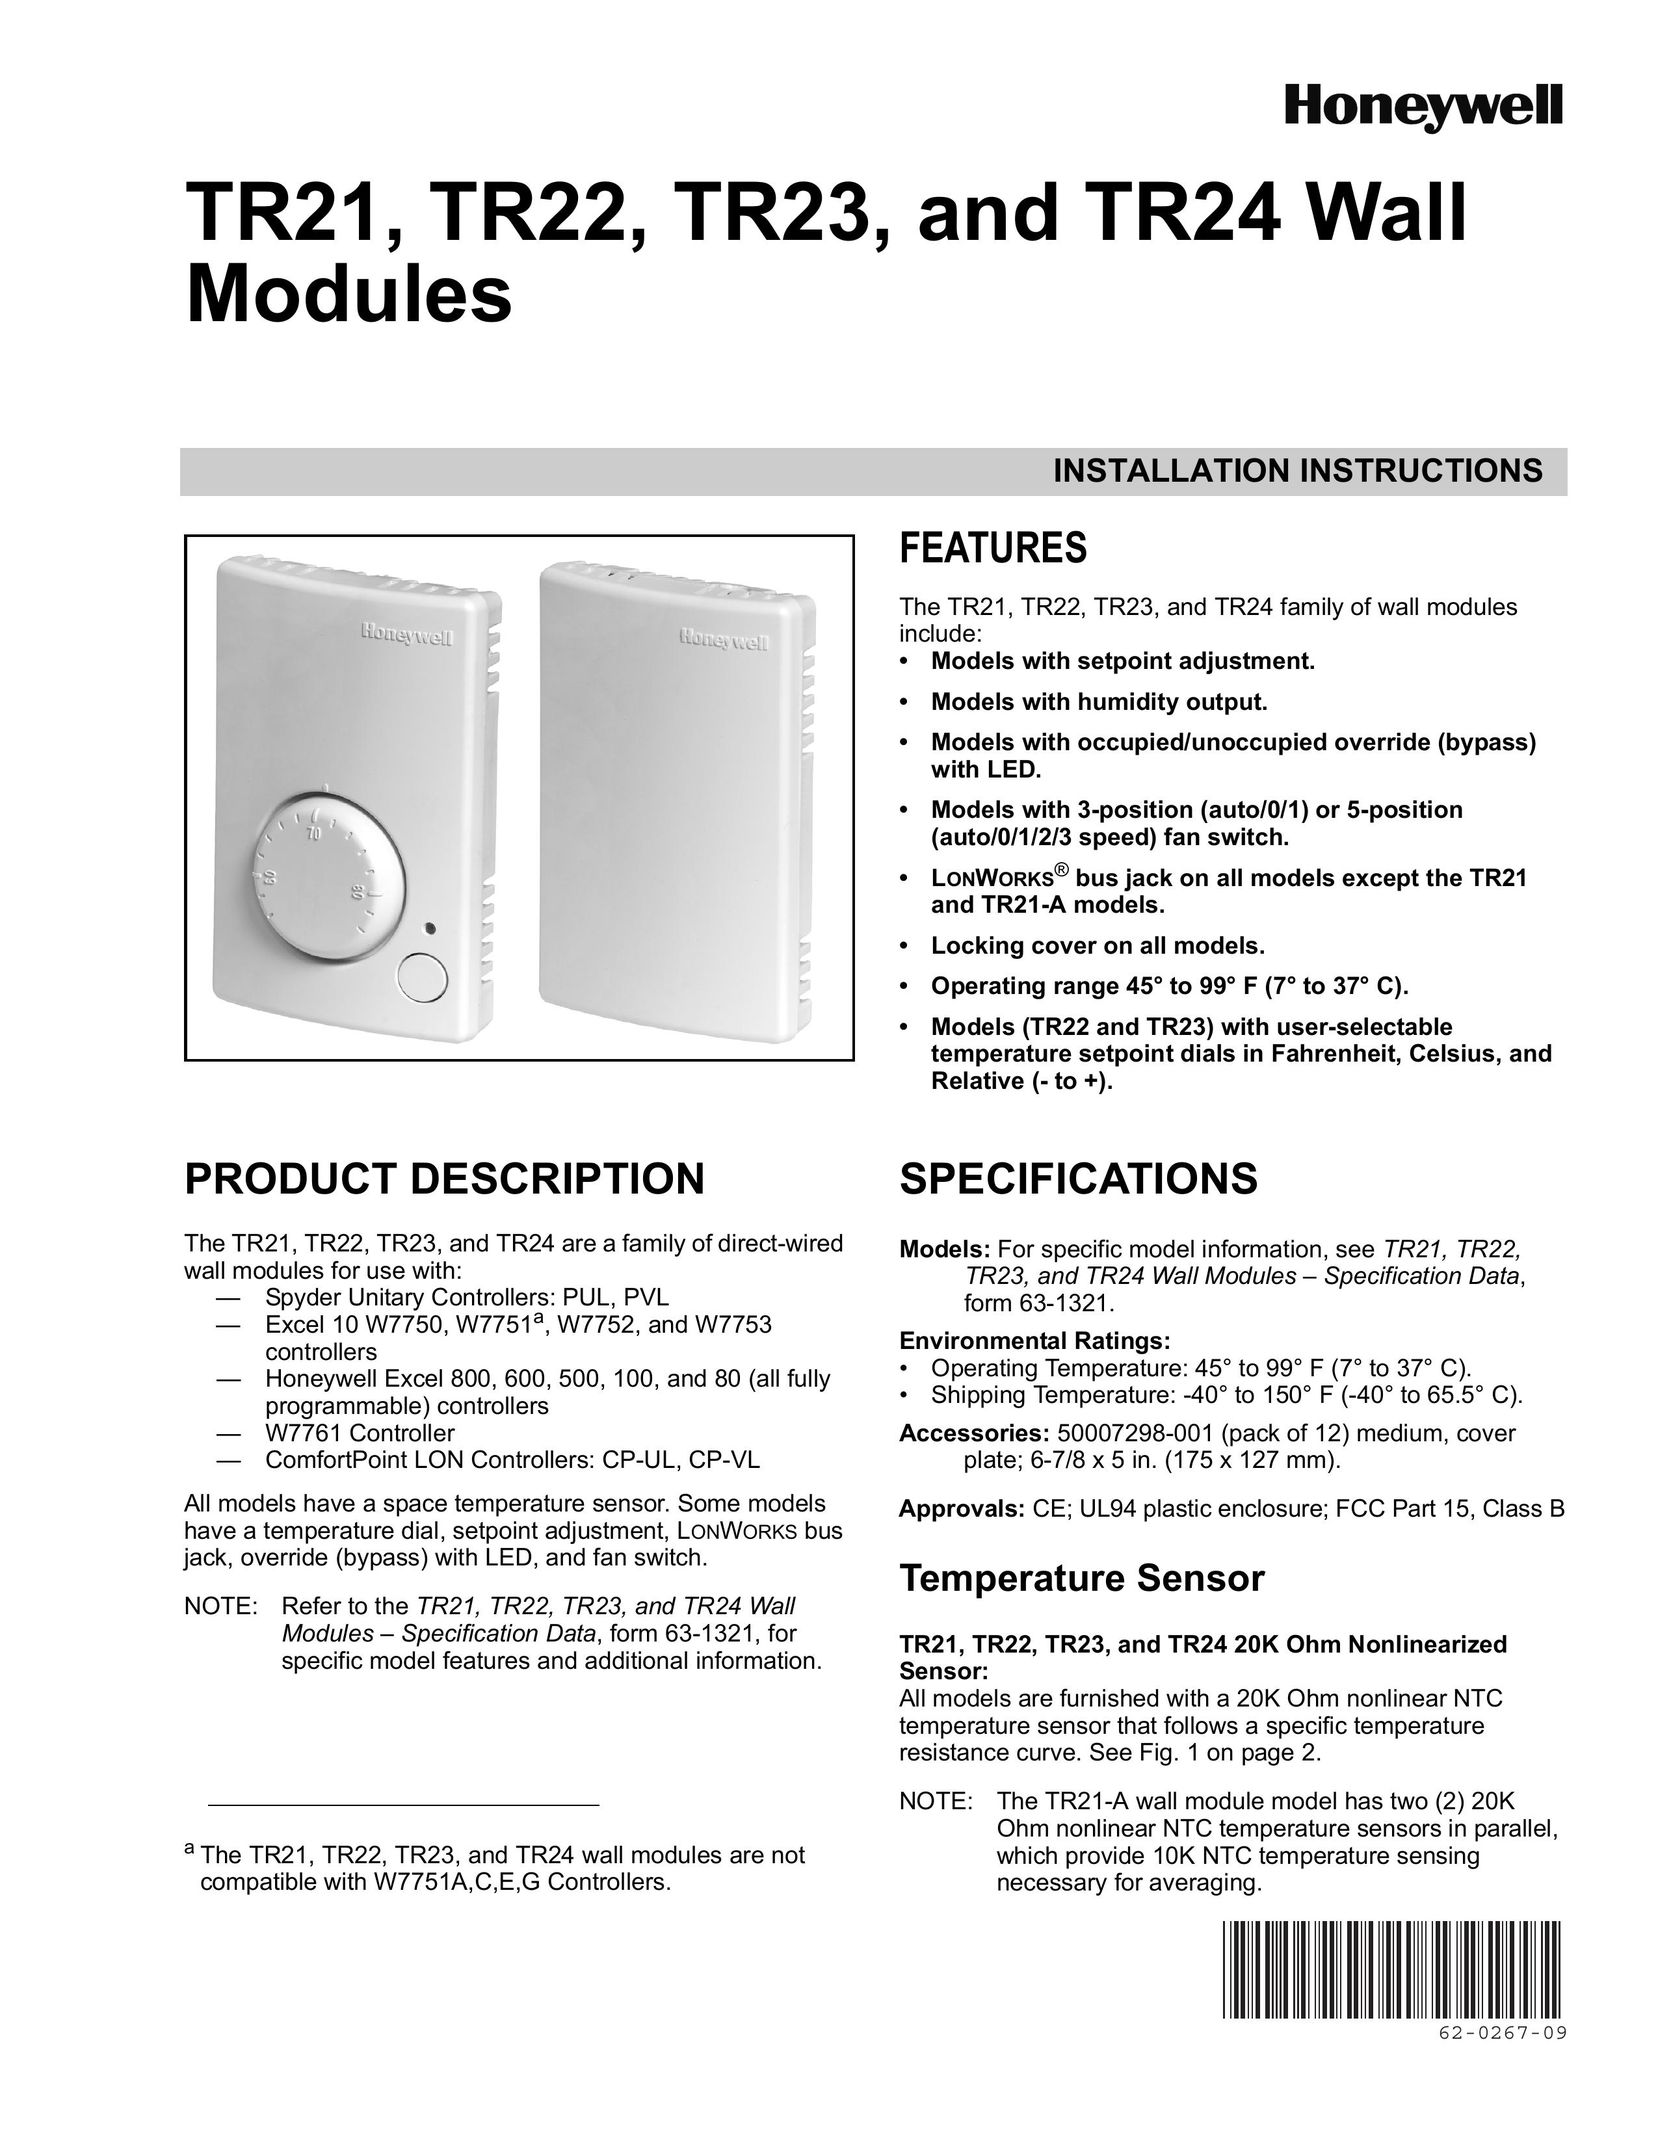 Honeywell TR23 TV Mount User Manual